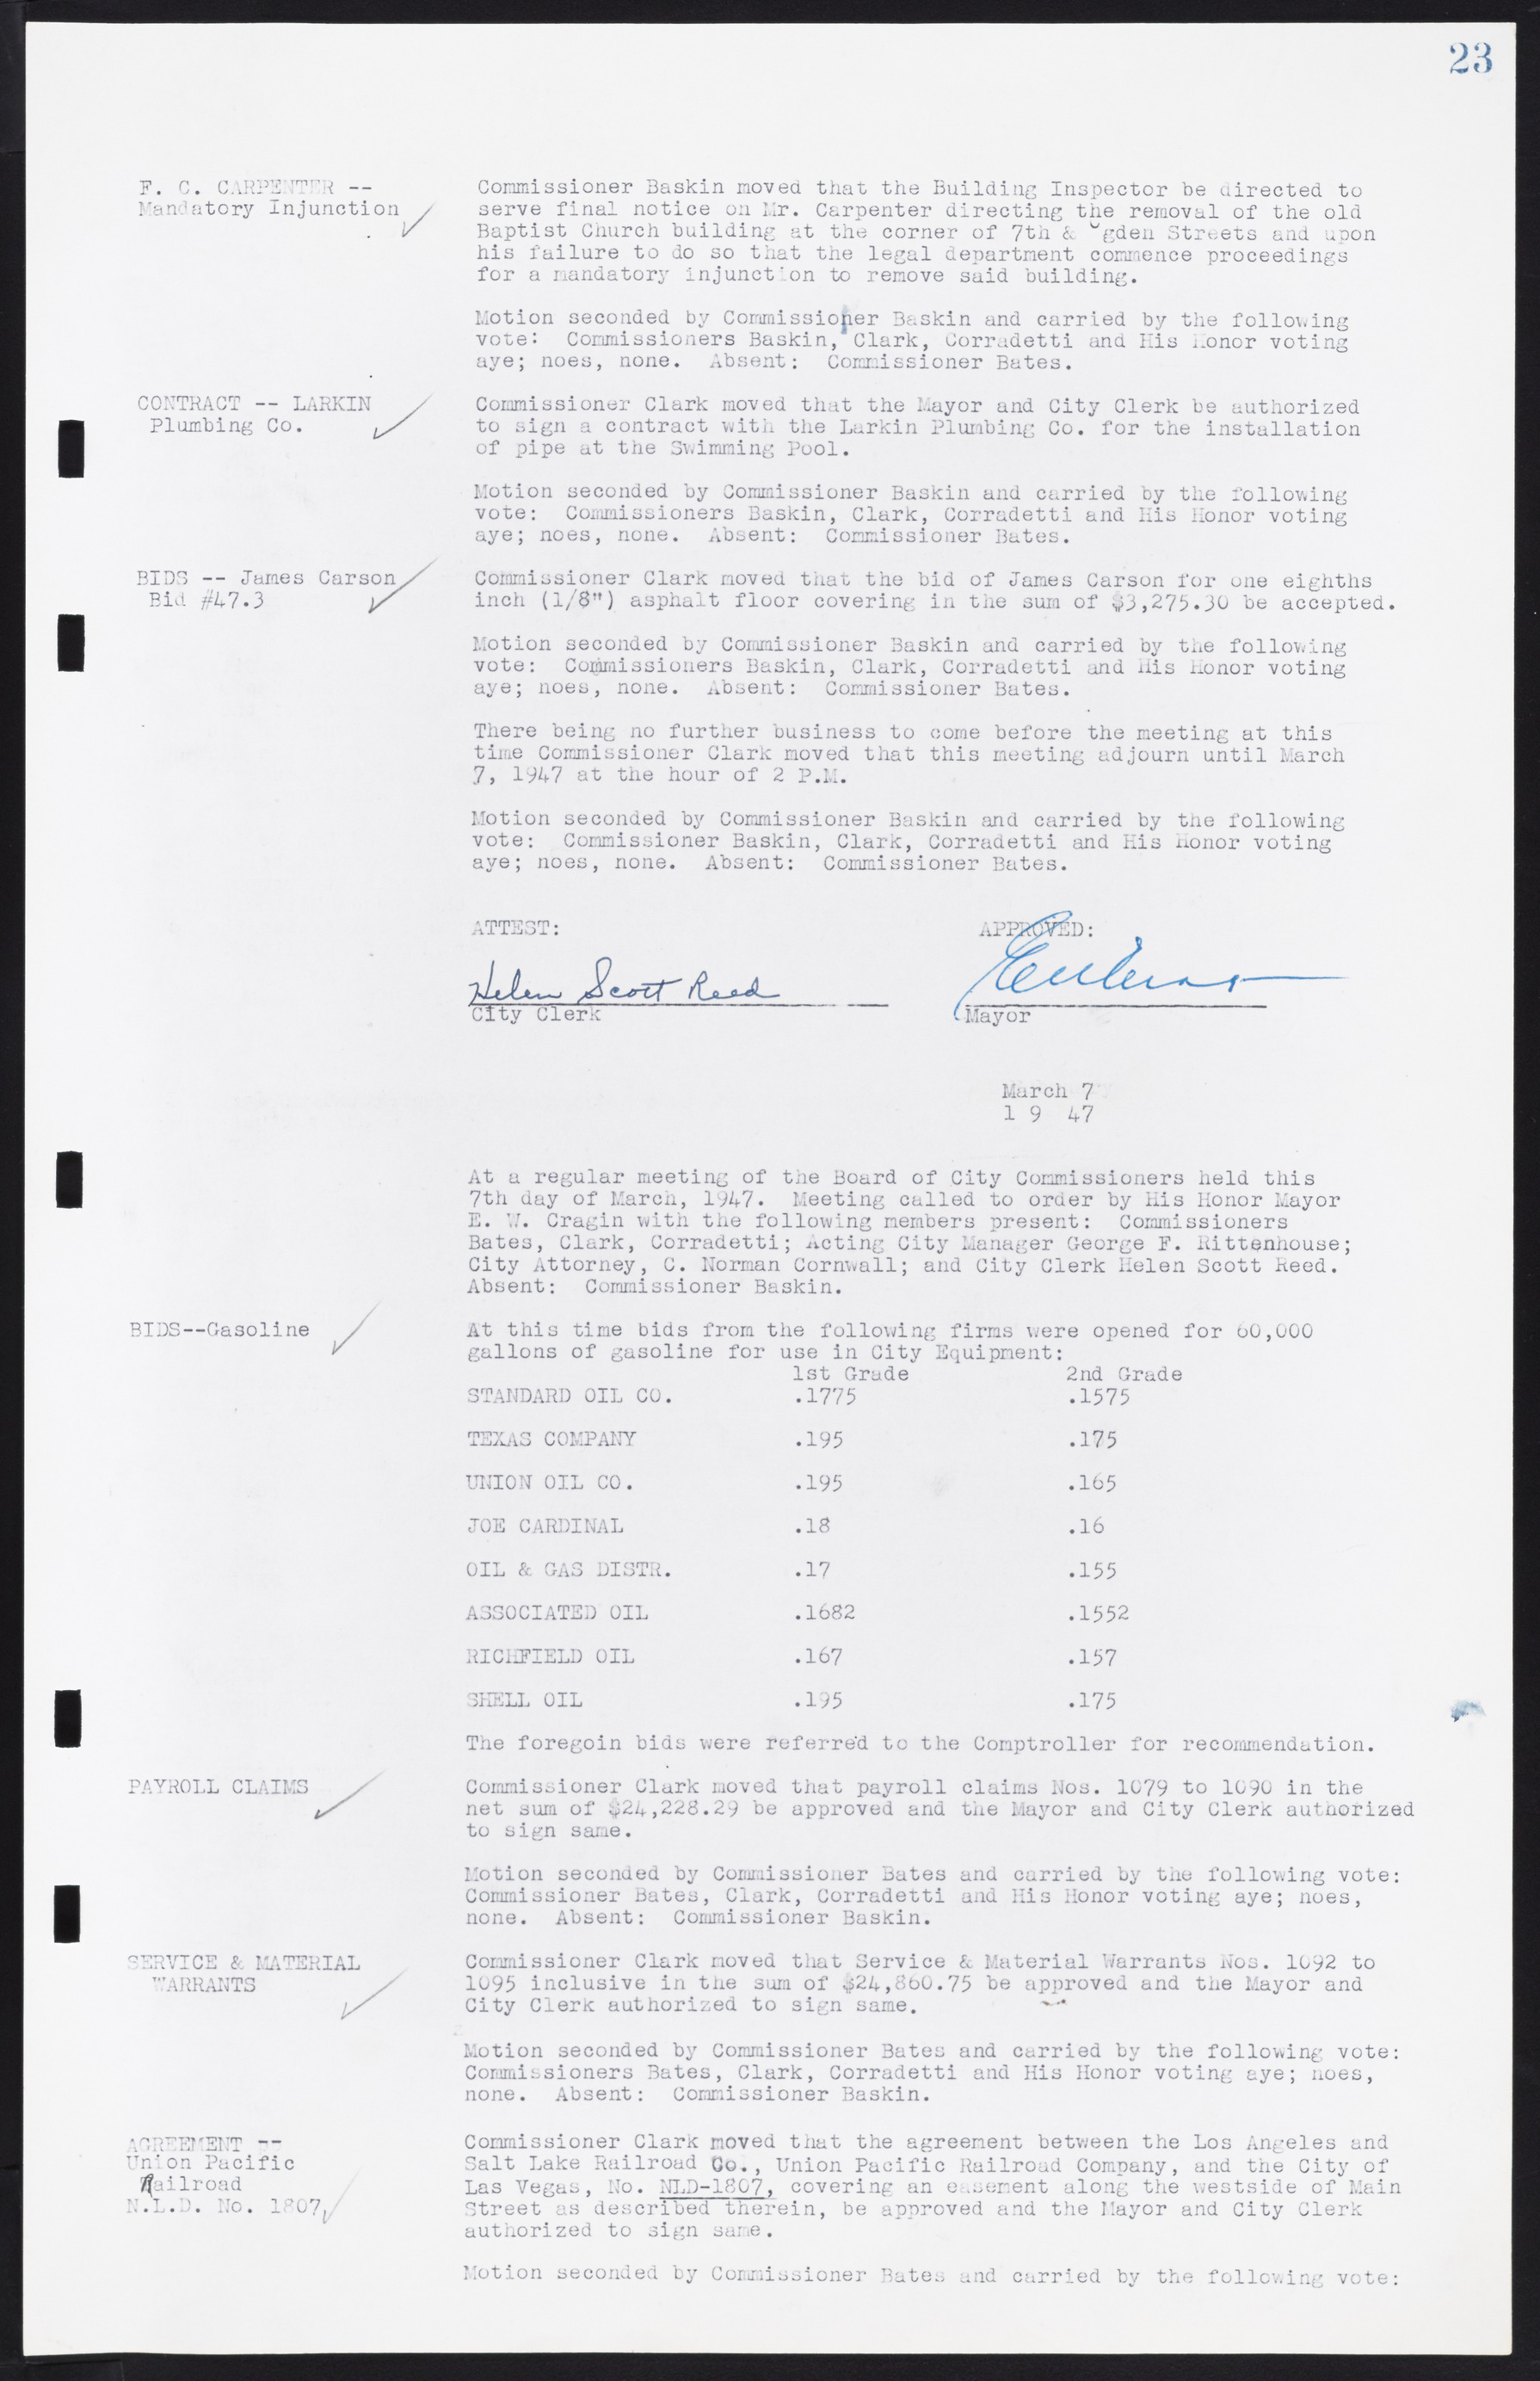 Las Vegas City Commission Minutes, January 7, 1947 to October 26, 1949, lvc000006-31